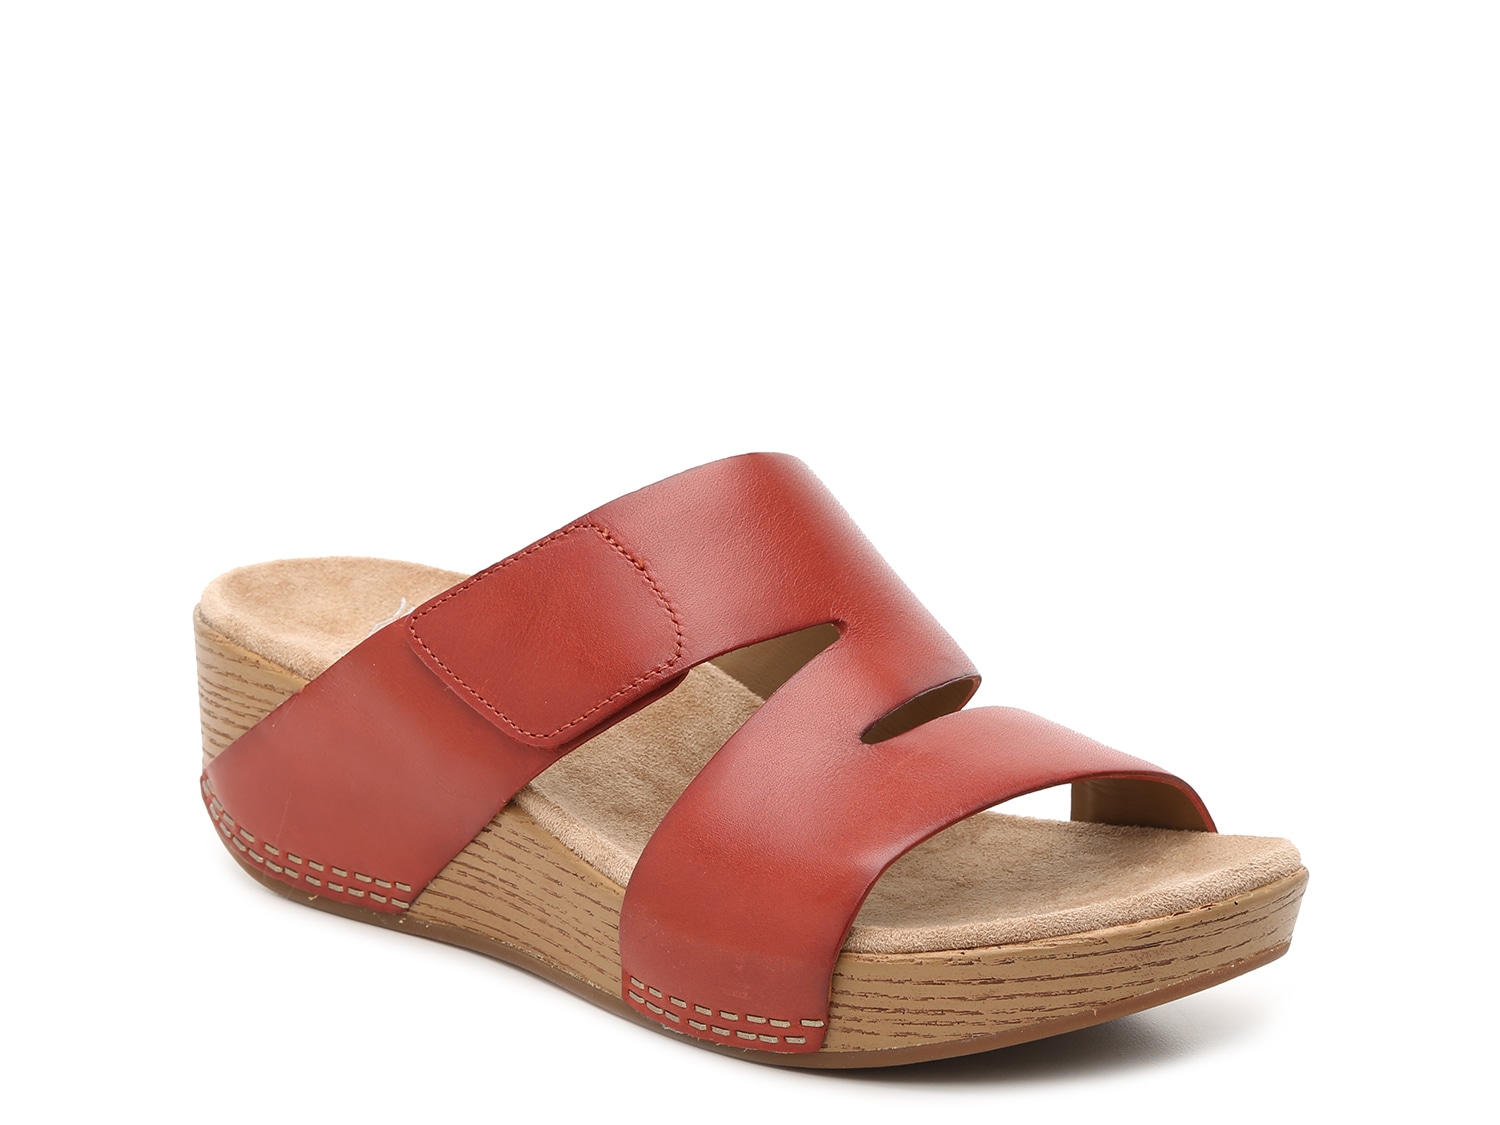 dansko lacee sandal